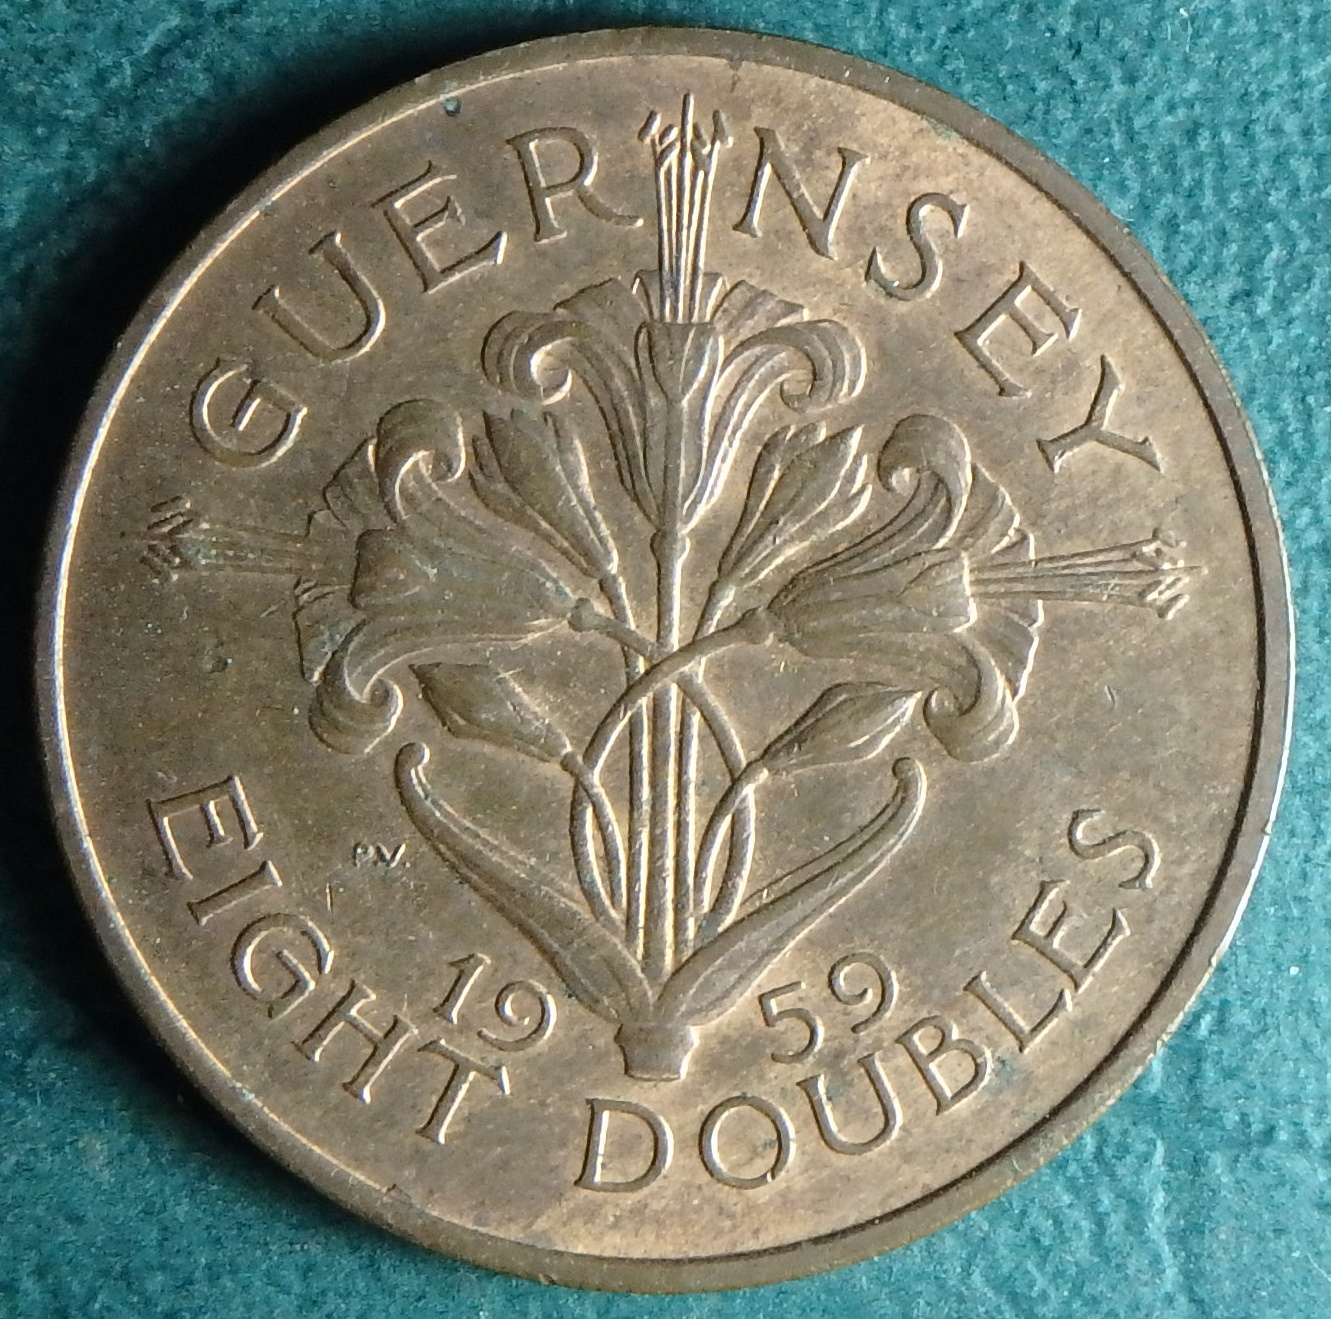 1959 Guernsey 8 d rev.JPG